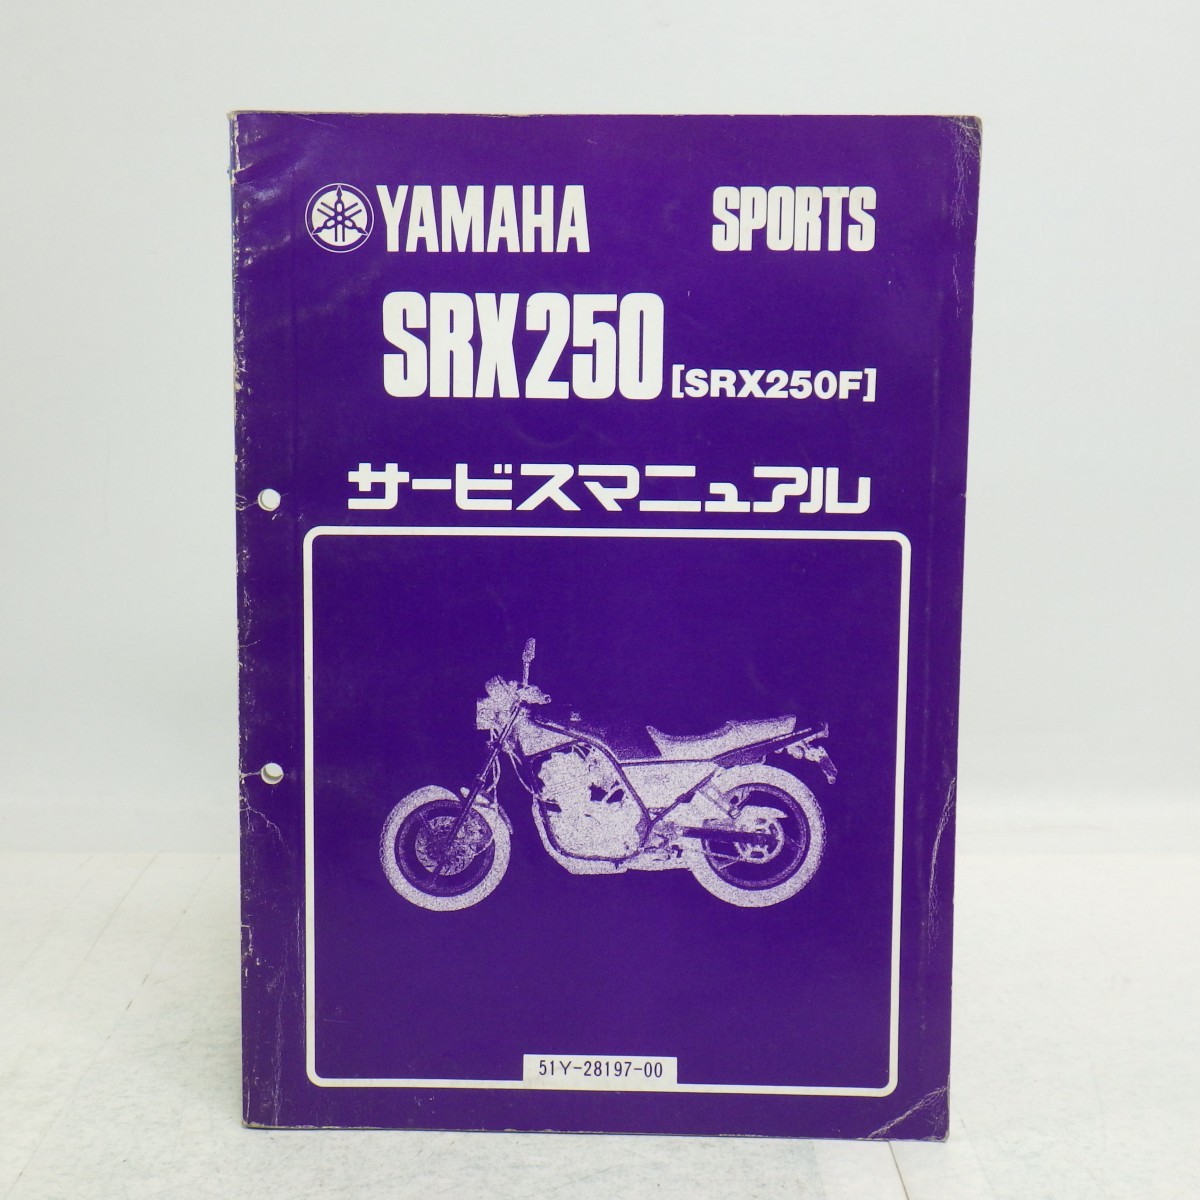  YAMAHA 「SRX250/SRX250F」 услуги  инструкция /51Y-28197-00/ Сёва 59 год   выпуск /YAMAHA SPORTS  мотоцикл  мотоцикл 　L